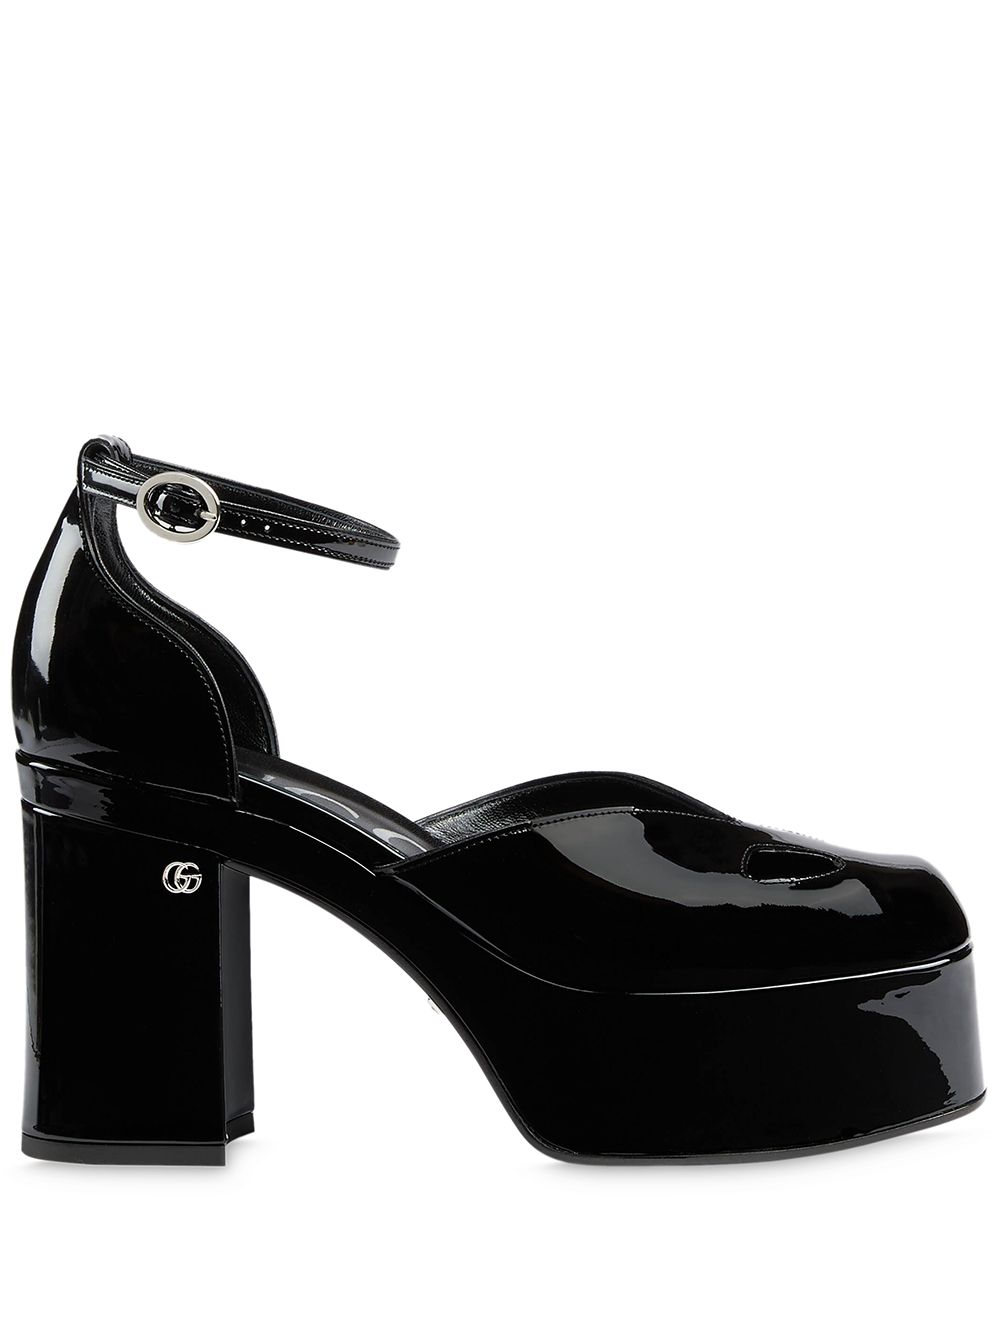 Patent Leather Pumps дамски обувки Gucci 841079204_36_5